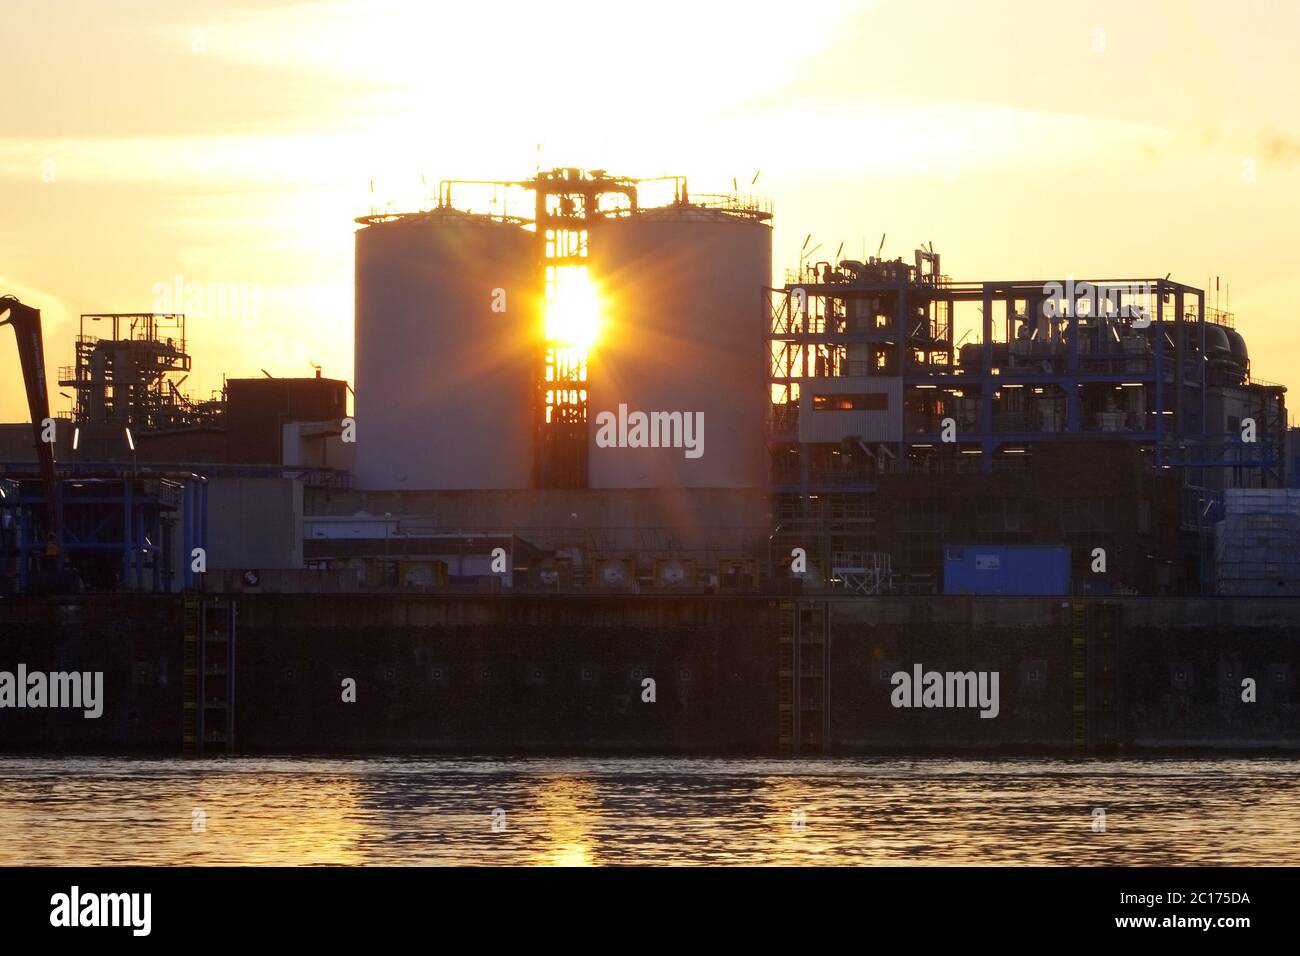 Bayer AG chemical plant on the Rhine riverbank at sunrise, Leverkusen, Germany, Europe Stock Photo